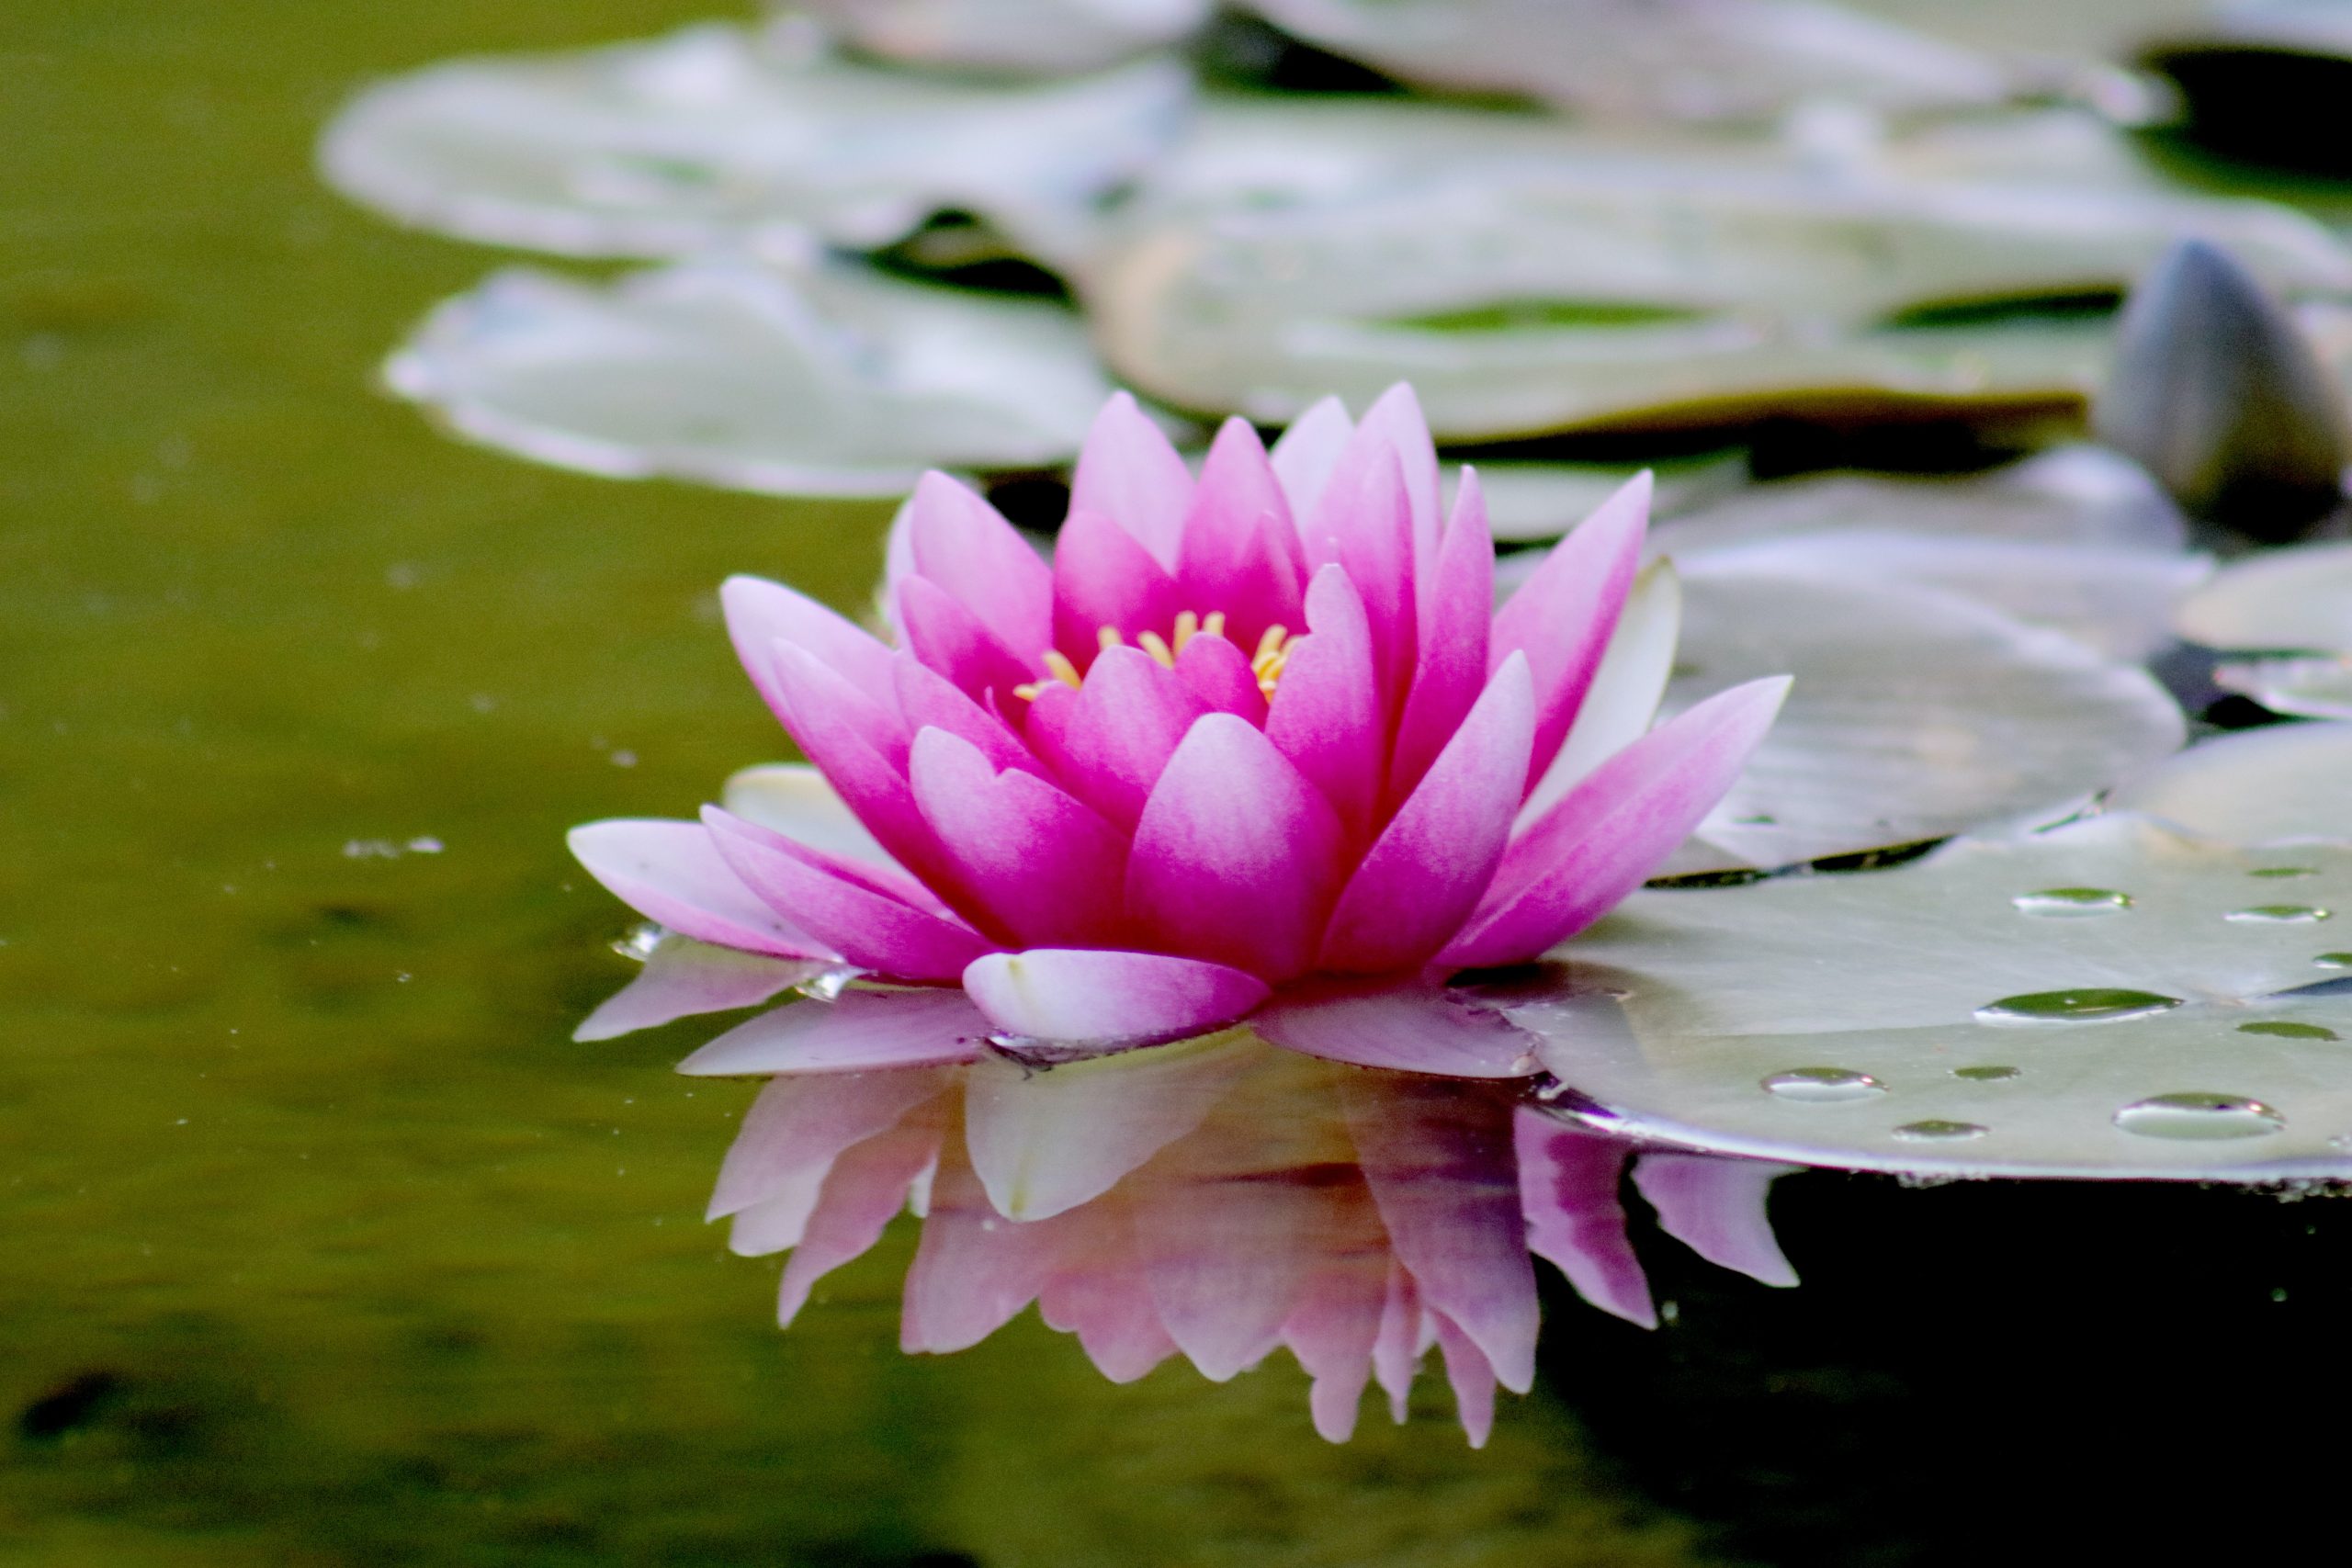 Chinese lotus flower in water